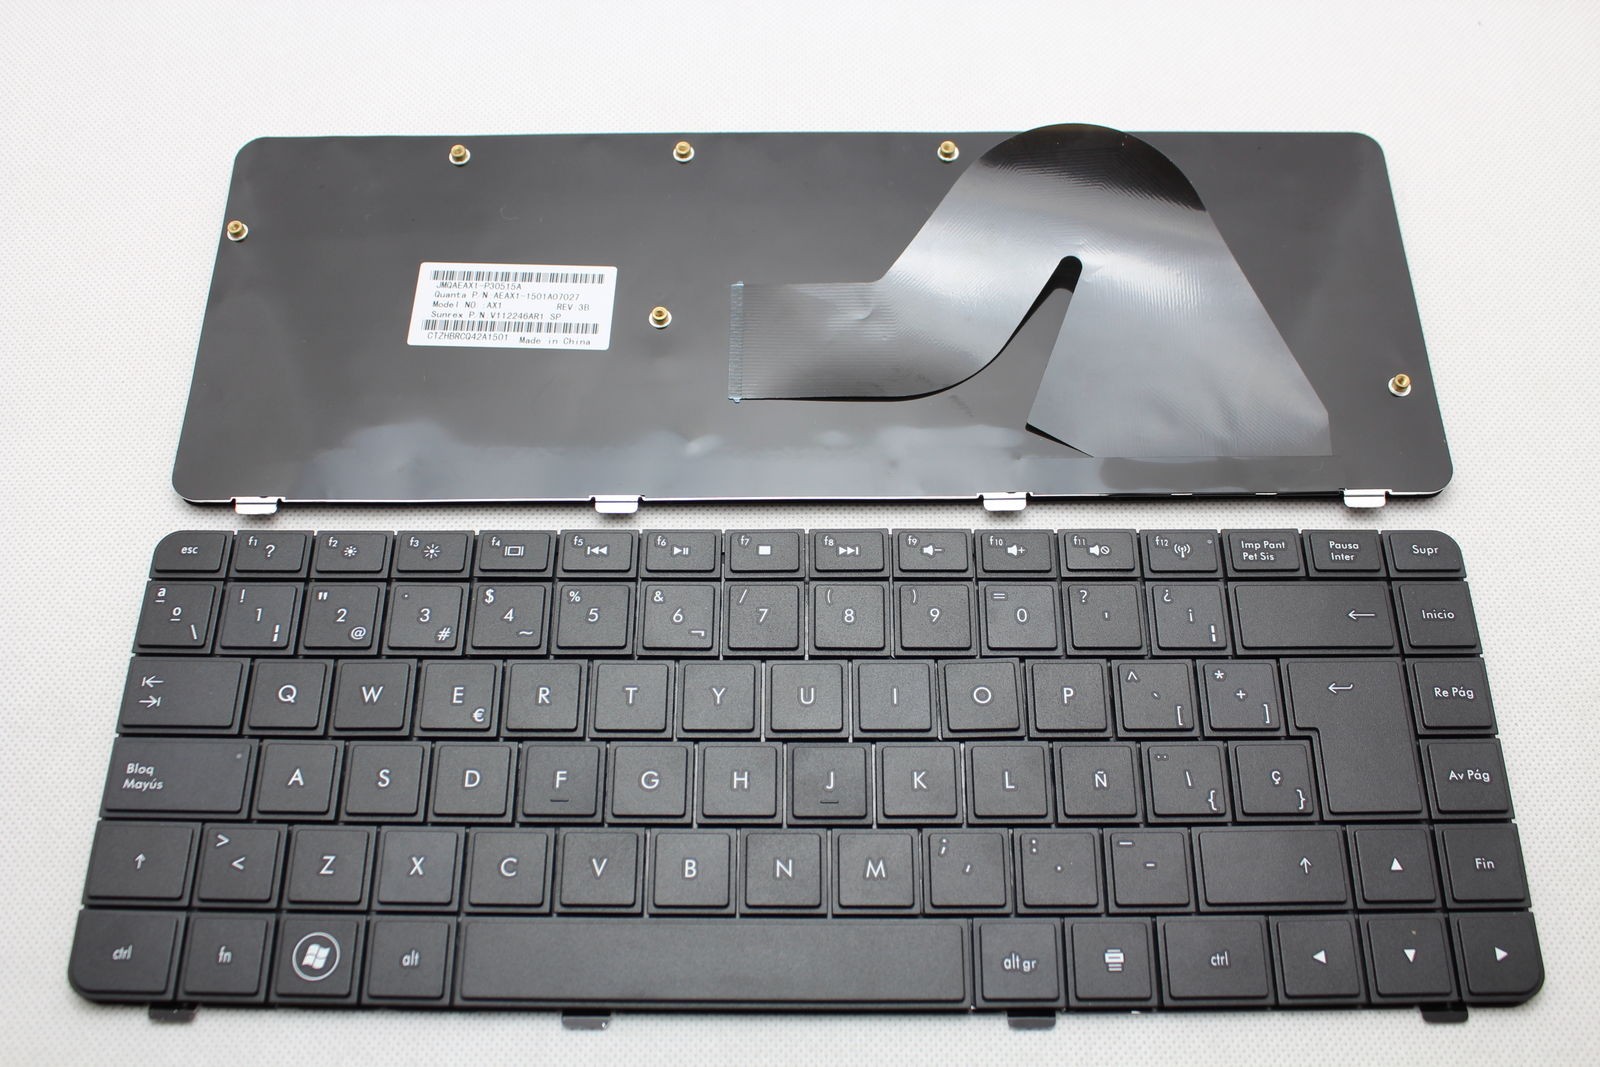 KeyBoard For Laptop HP Compaq Presario 